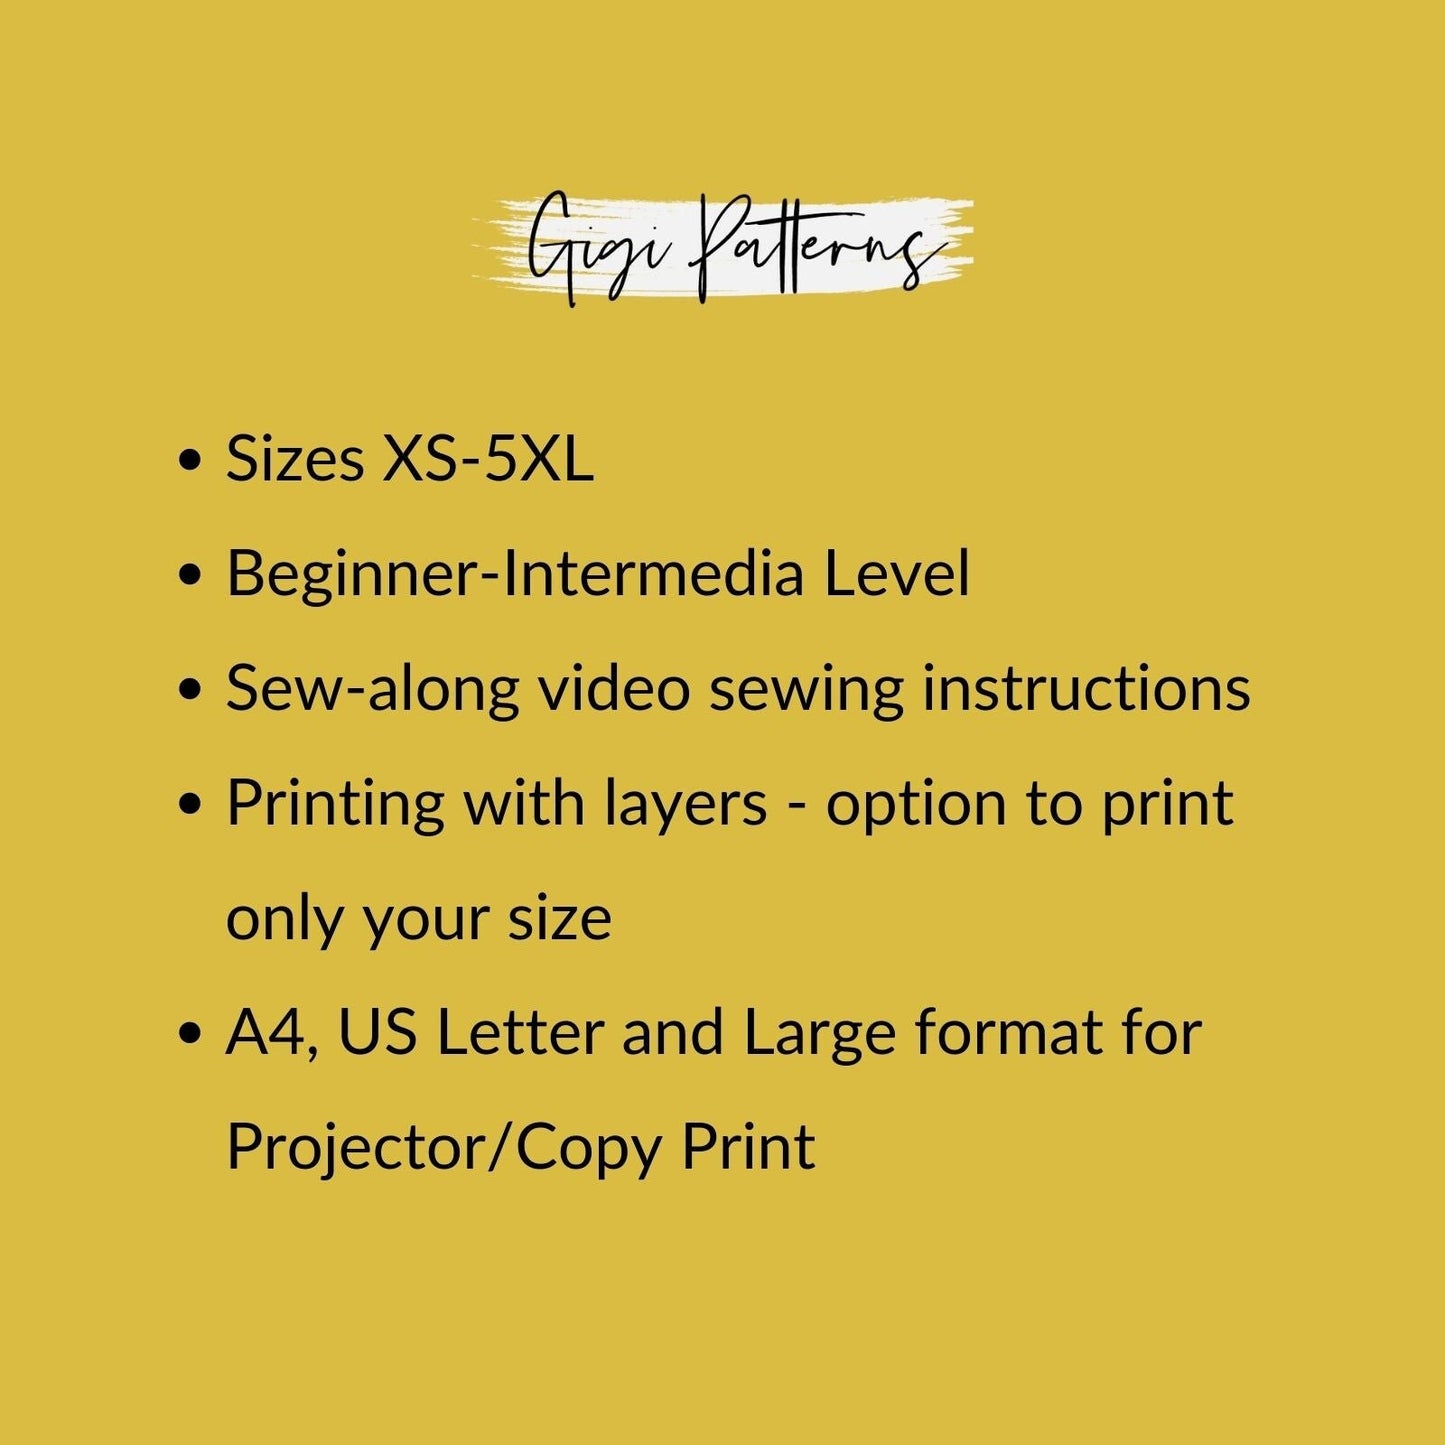 PDF Swimsuit Pattern Long Sleeves High Cut One Piece Swimsuit XS-5XL